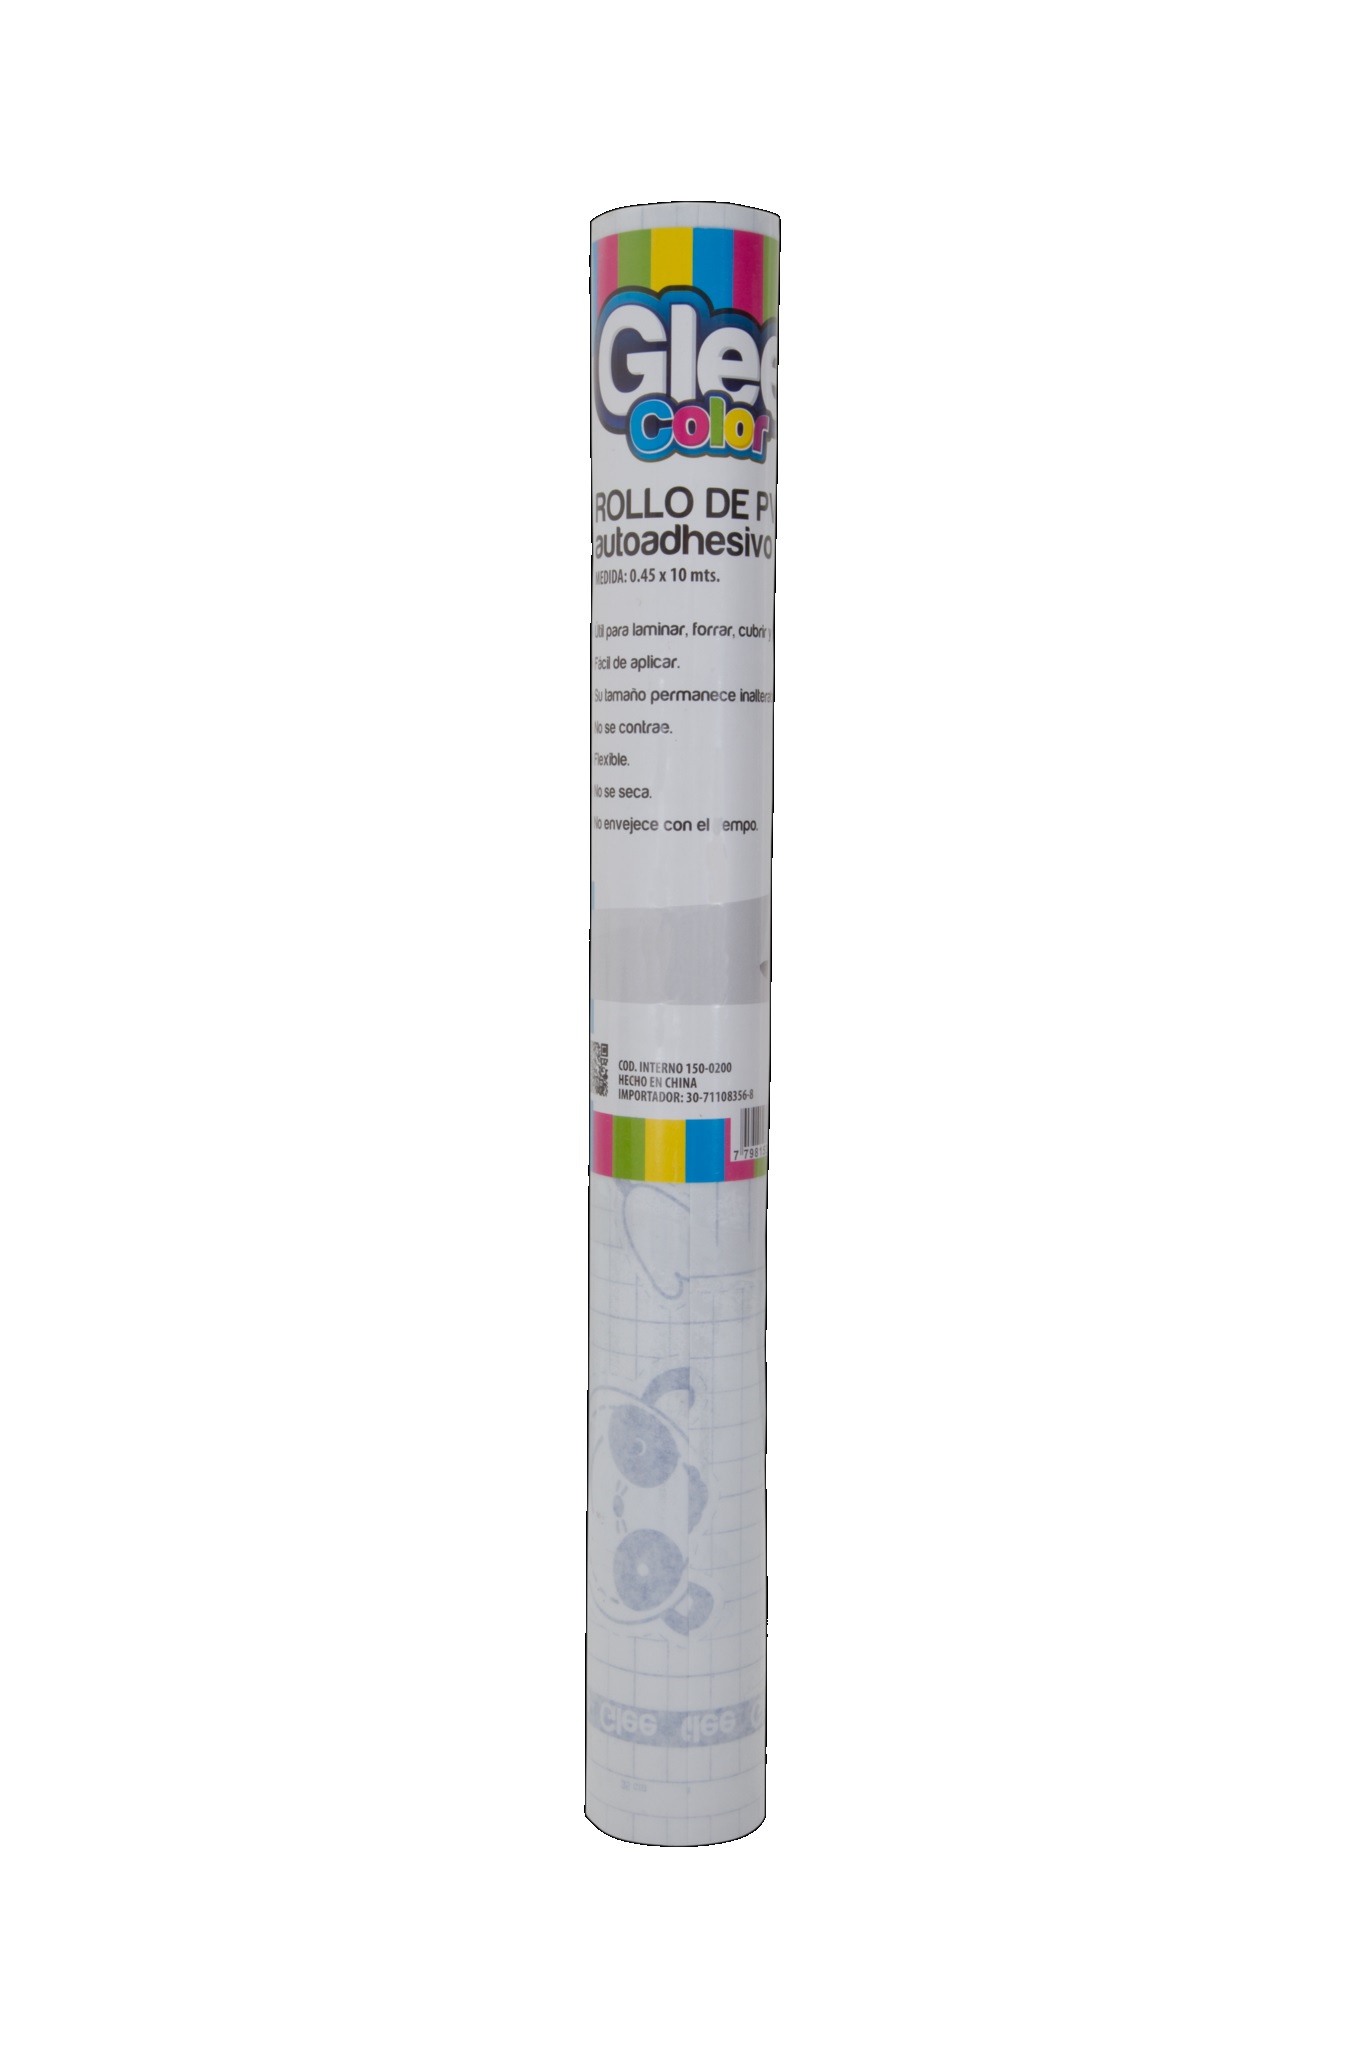 ROLLO LIGGO PVC - GLEE COLOR 0.45 X 2MTS (150-0320)